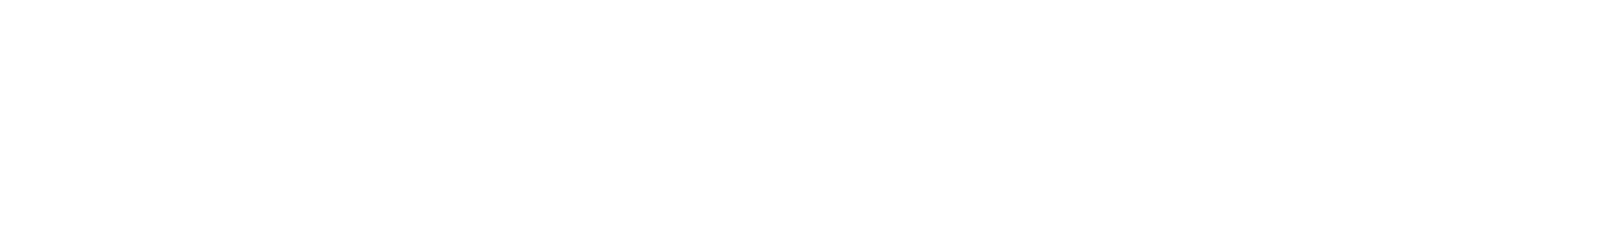 Lundin Mining
 logo large for dark backgrounds (transparent PNG)